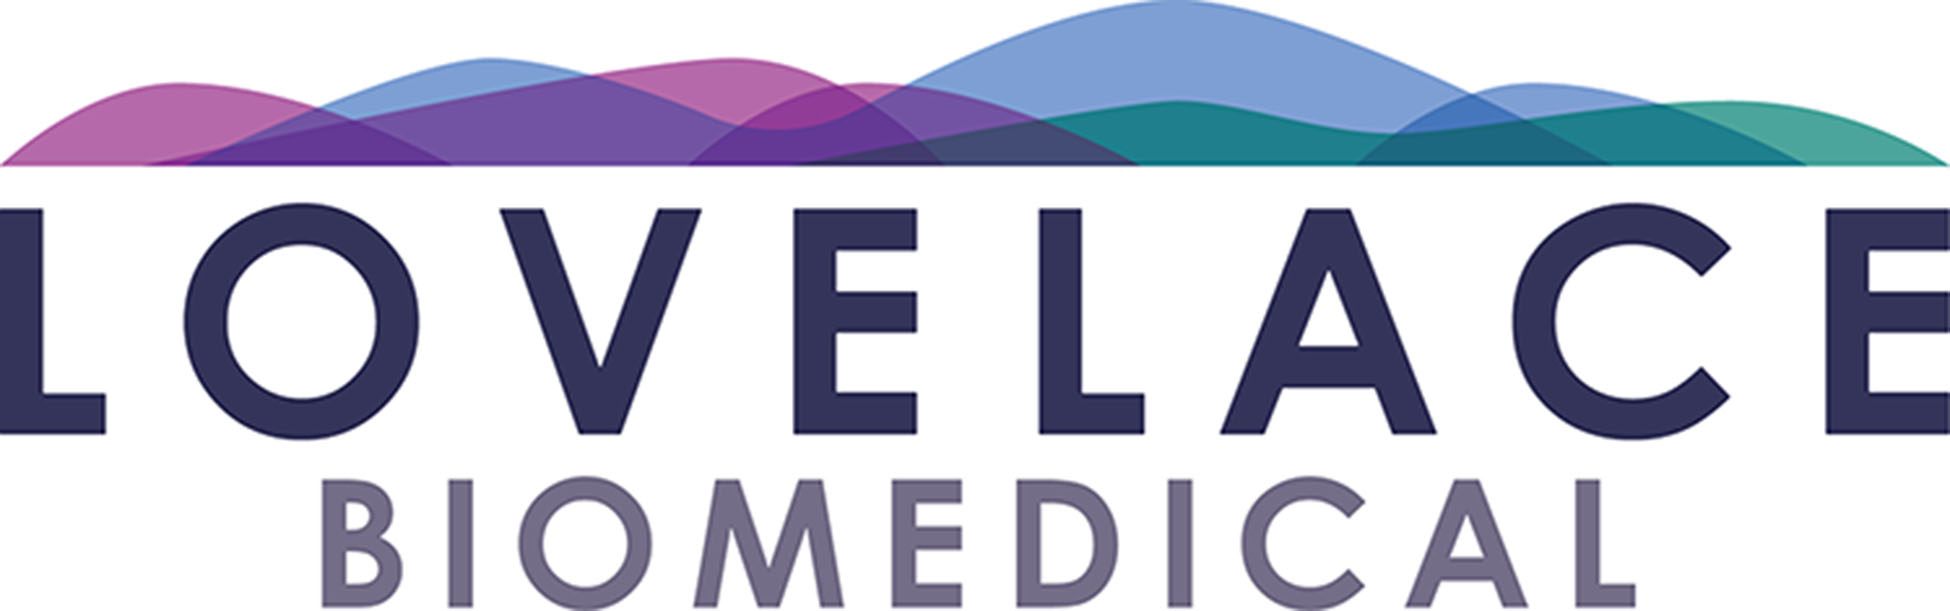 Logo biomedico Lovelace